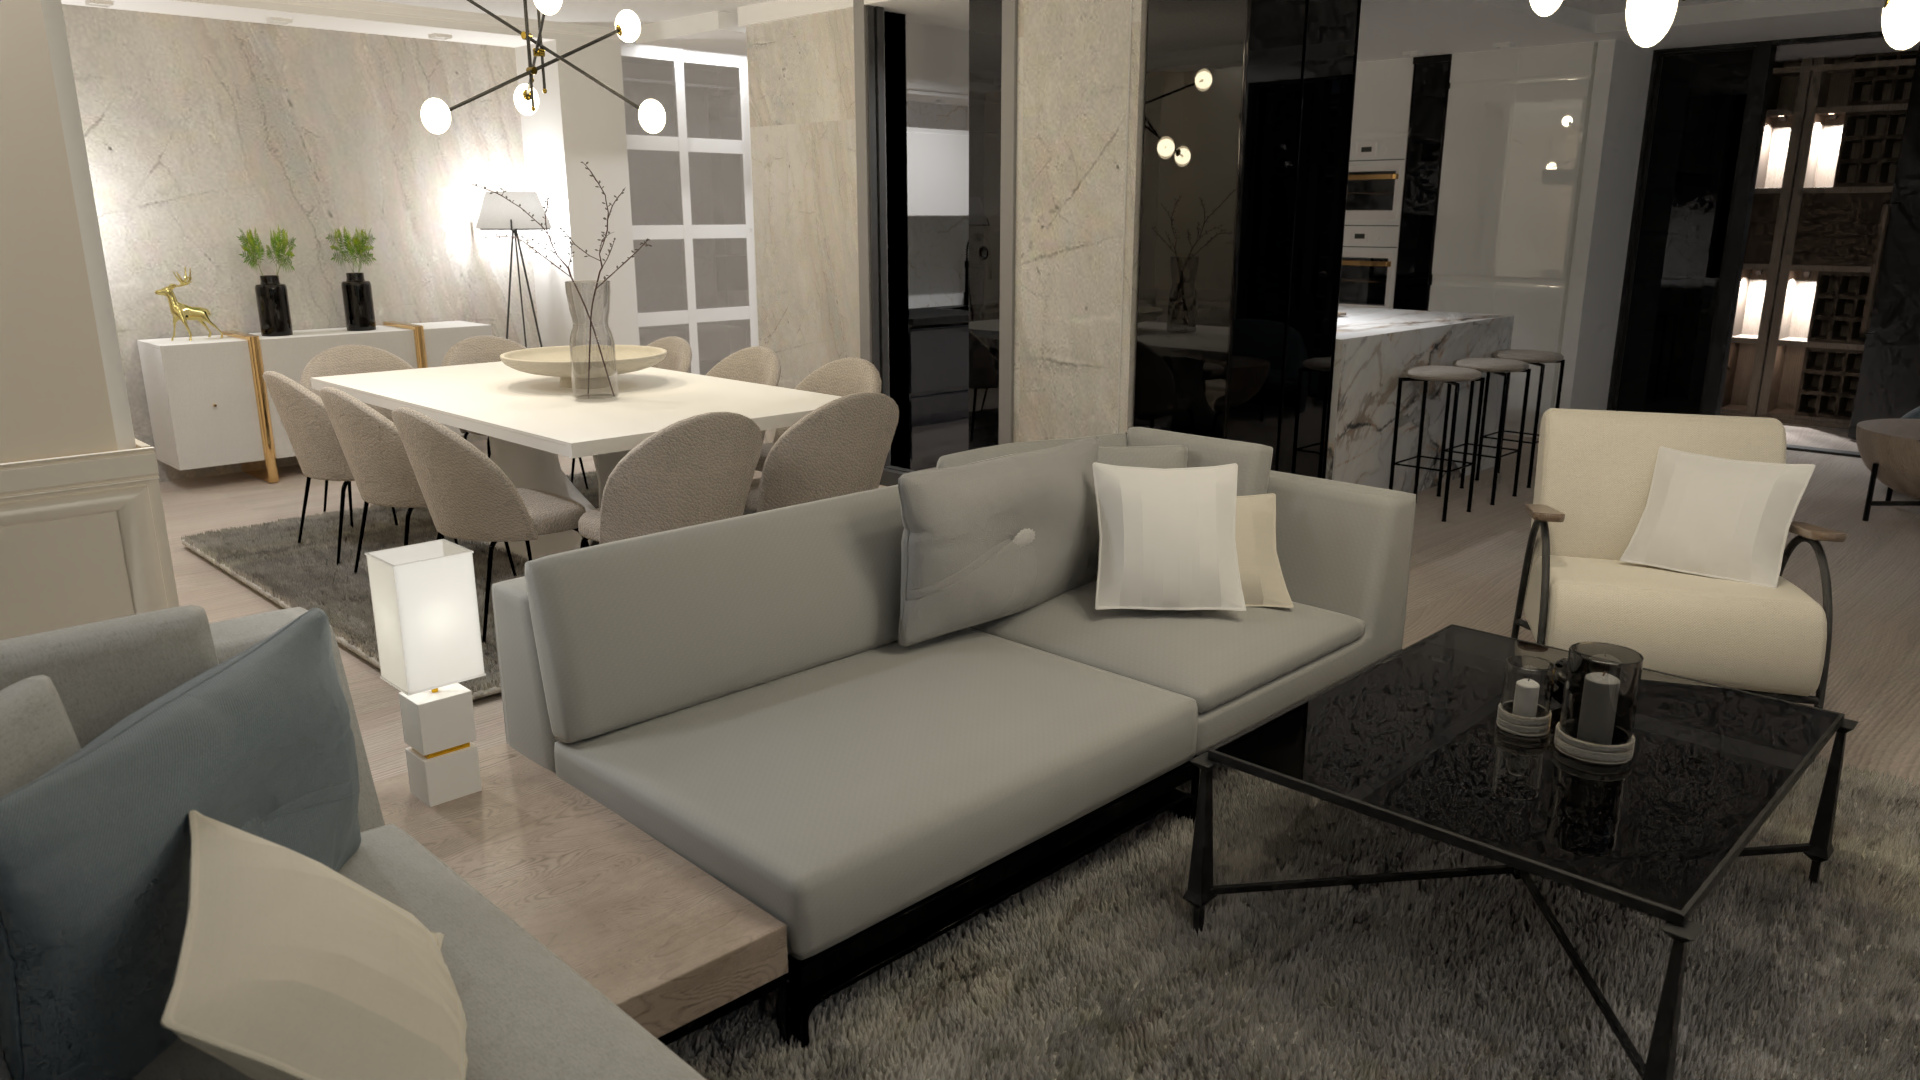 Living room 12291625 by Tamara Jankovic image